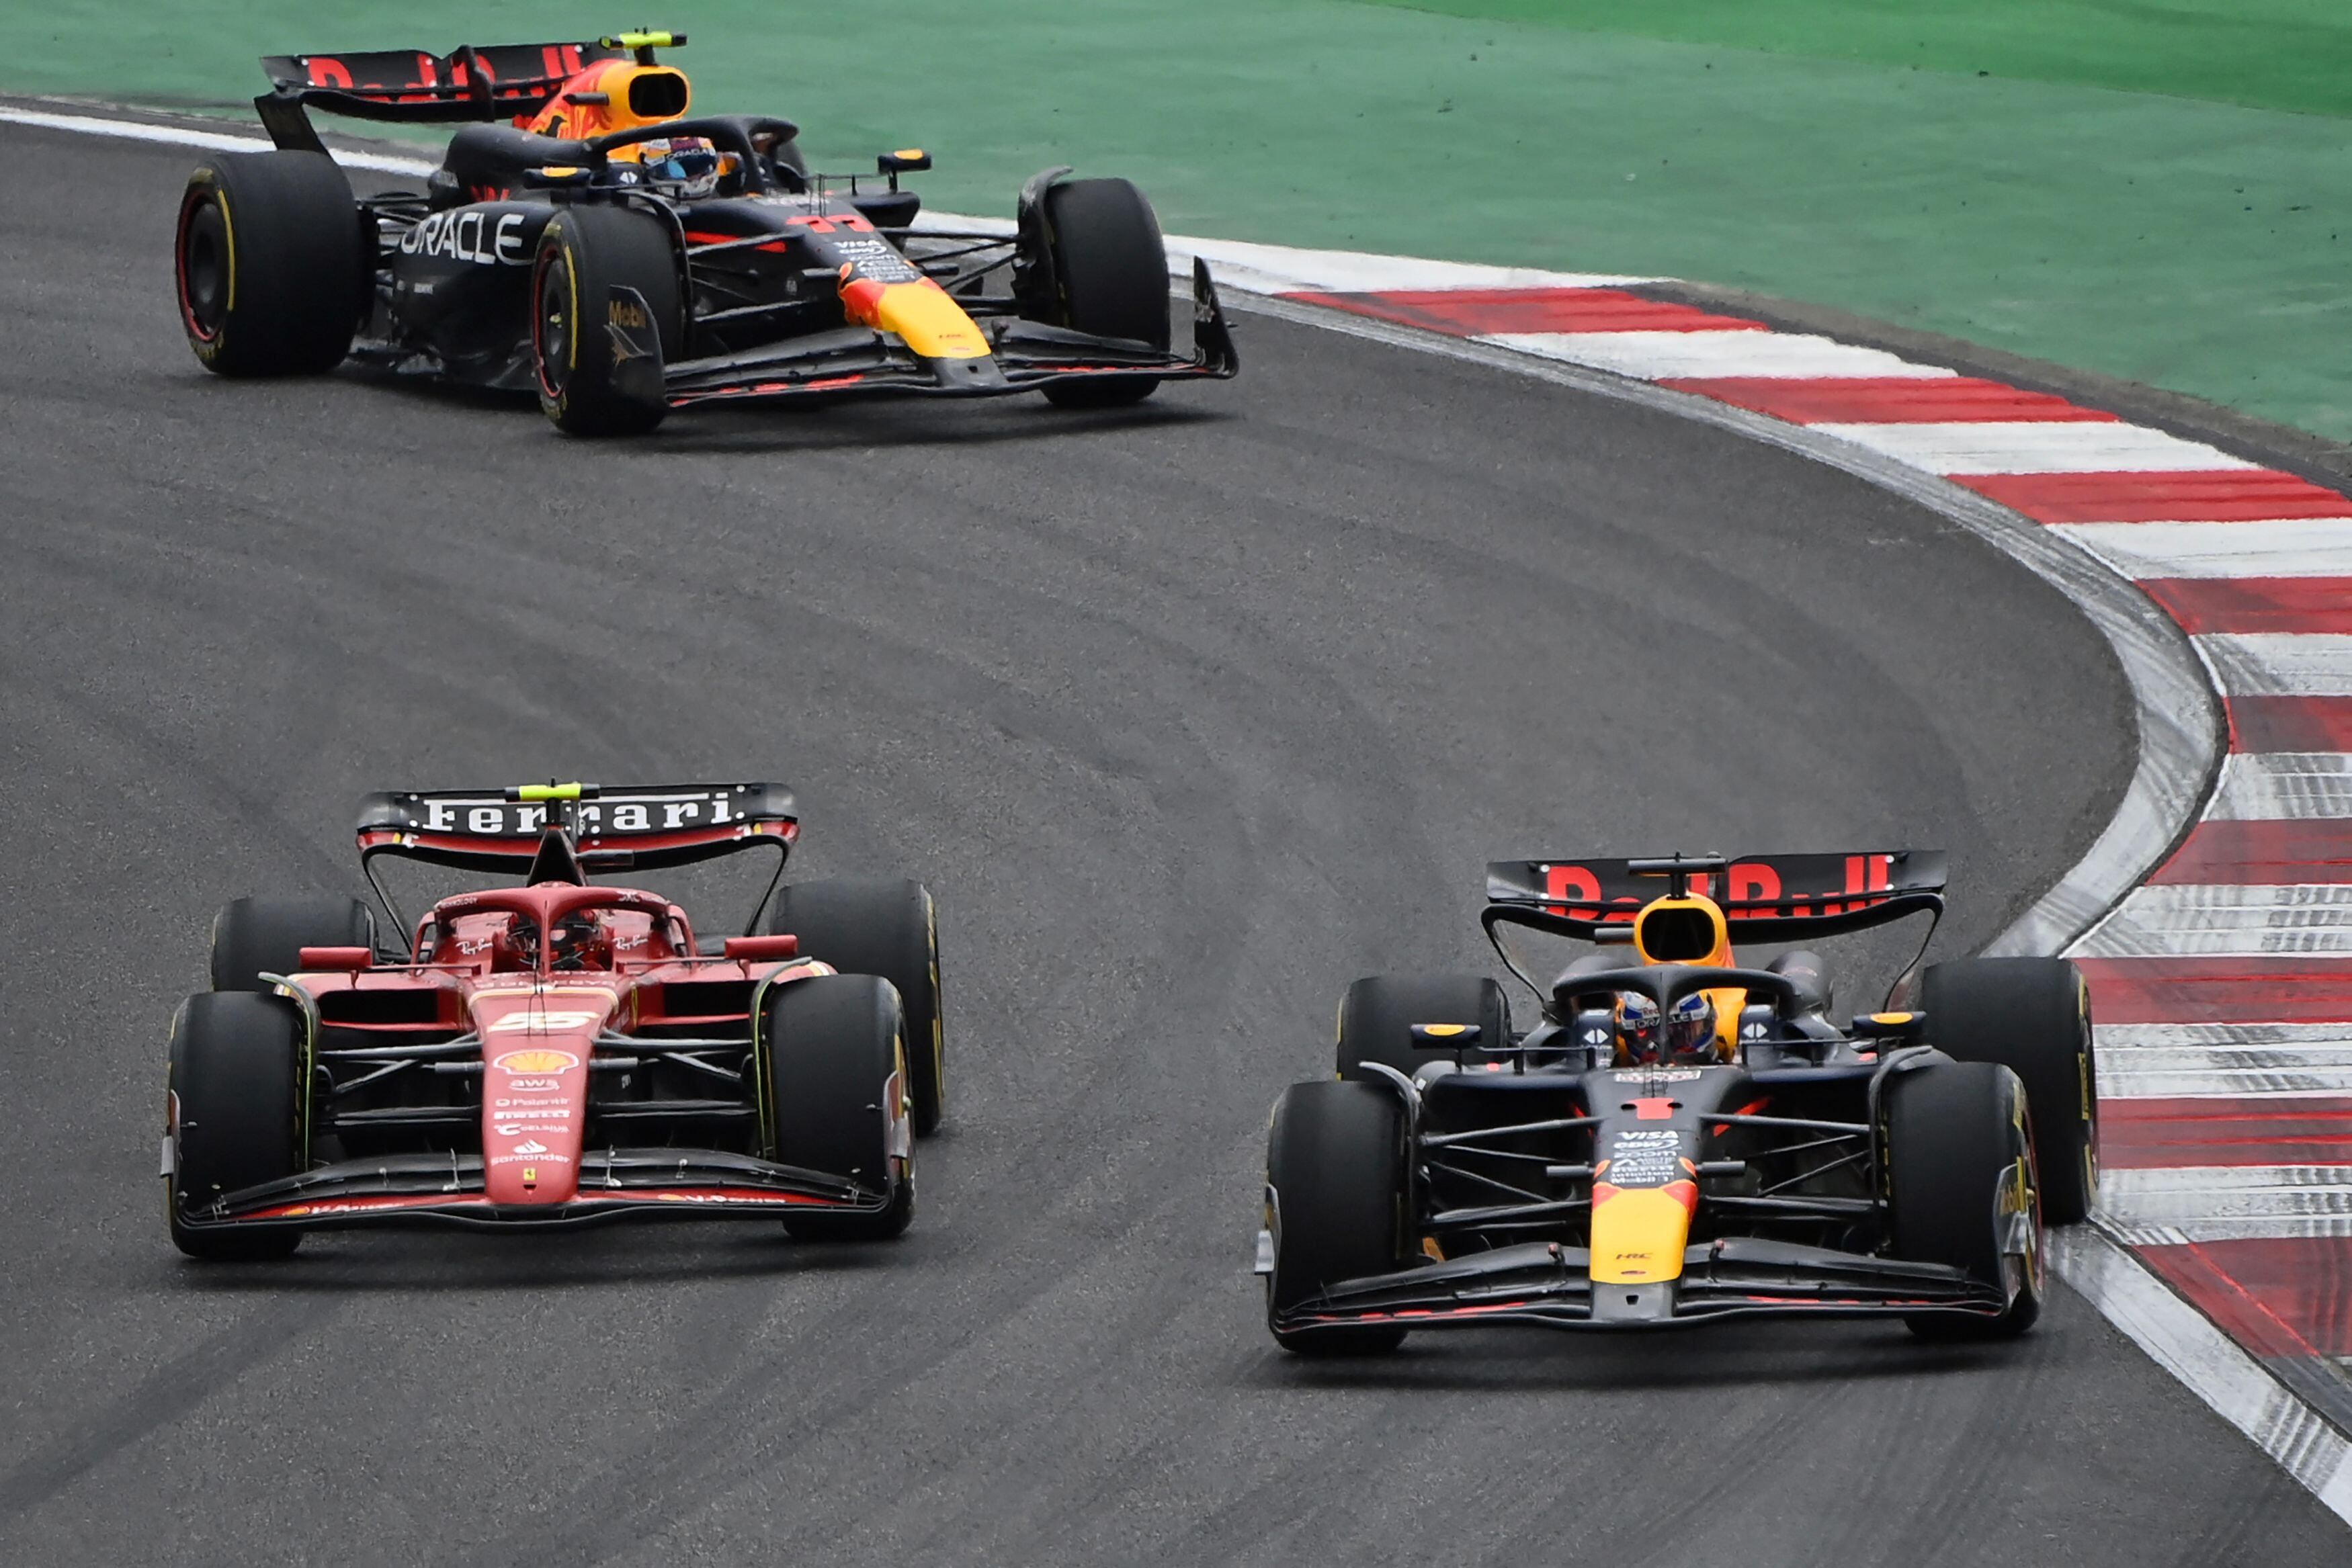 Fórmula 1: Max Verstappen ganó la carrera sprint del Gran Premio de China y hubo rispideces en la lucha Alonso-Sainz-Pérez-Leclerc